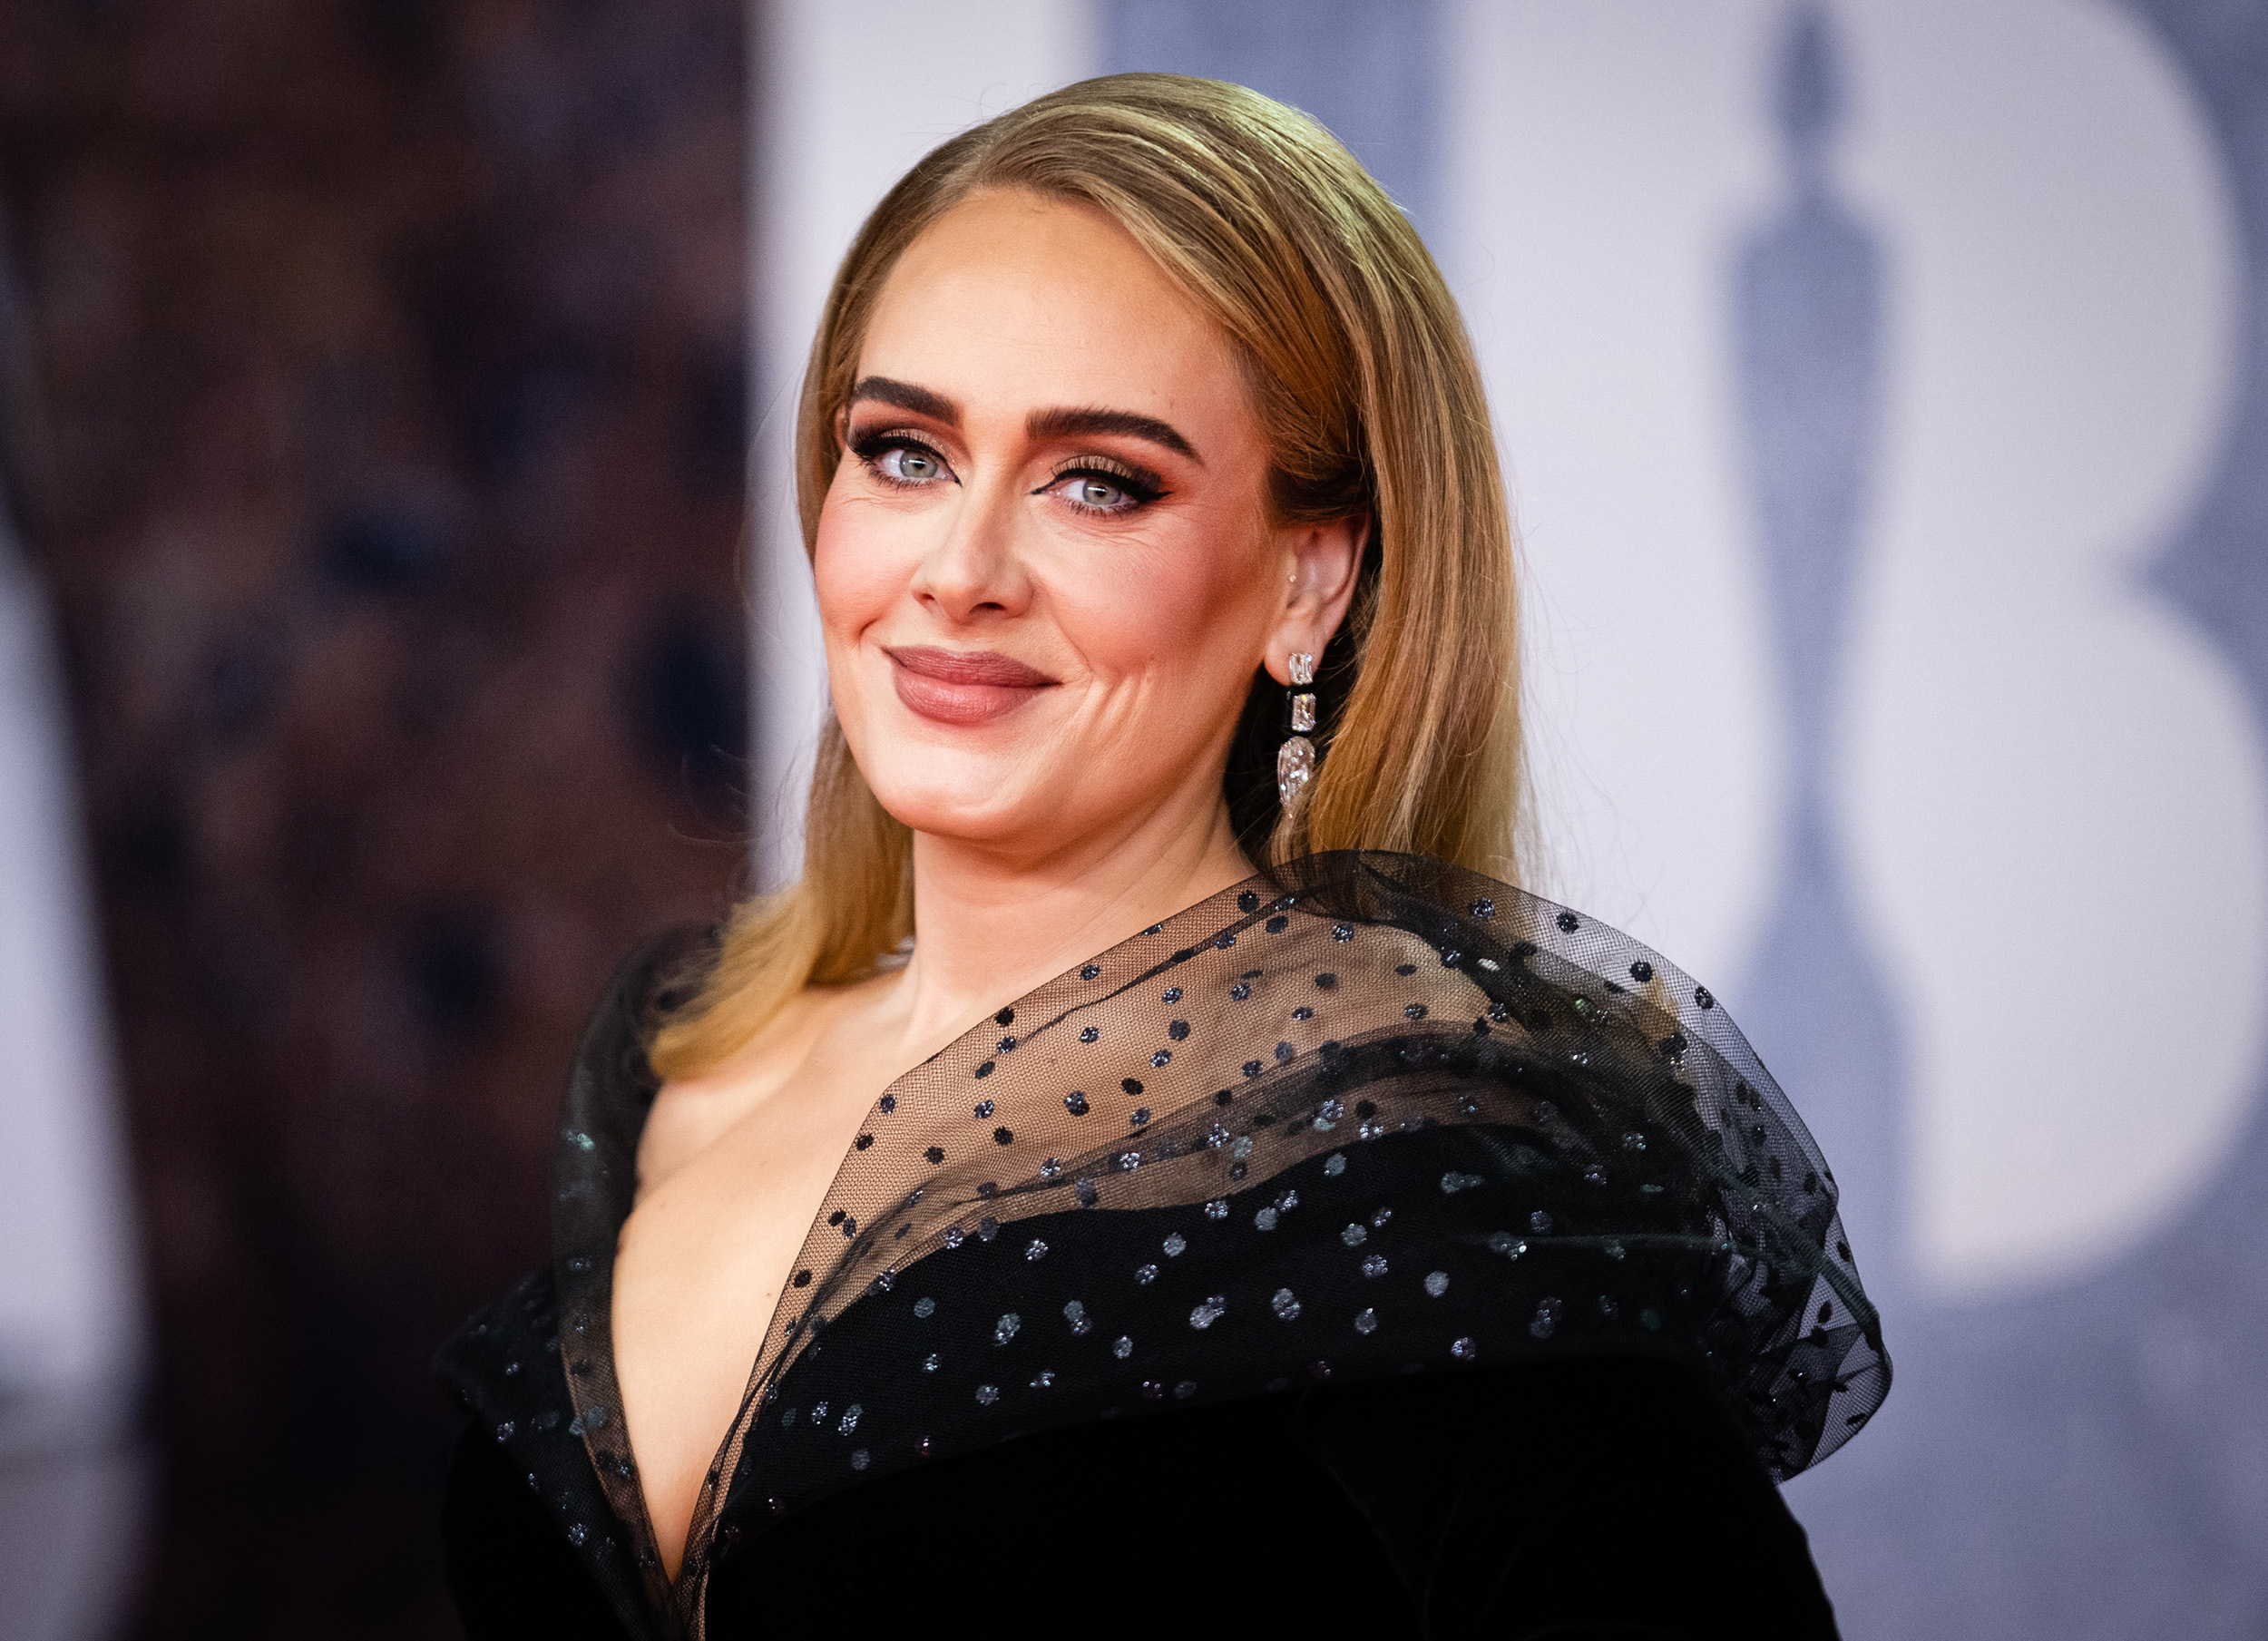 Adele's Net Worth In 2022